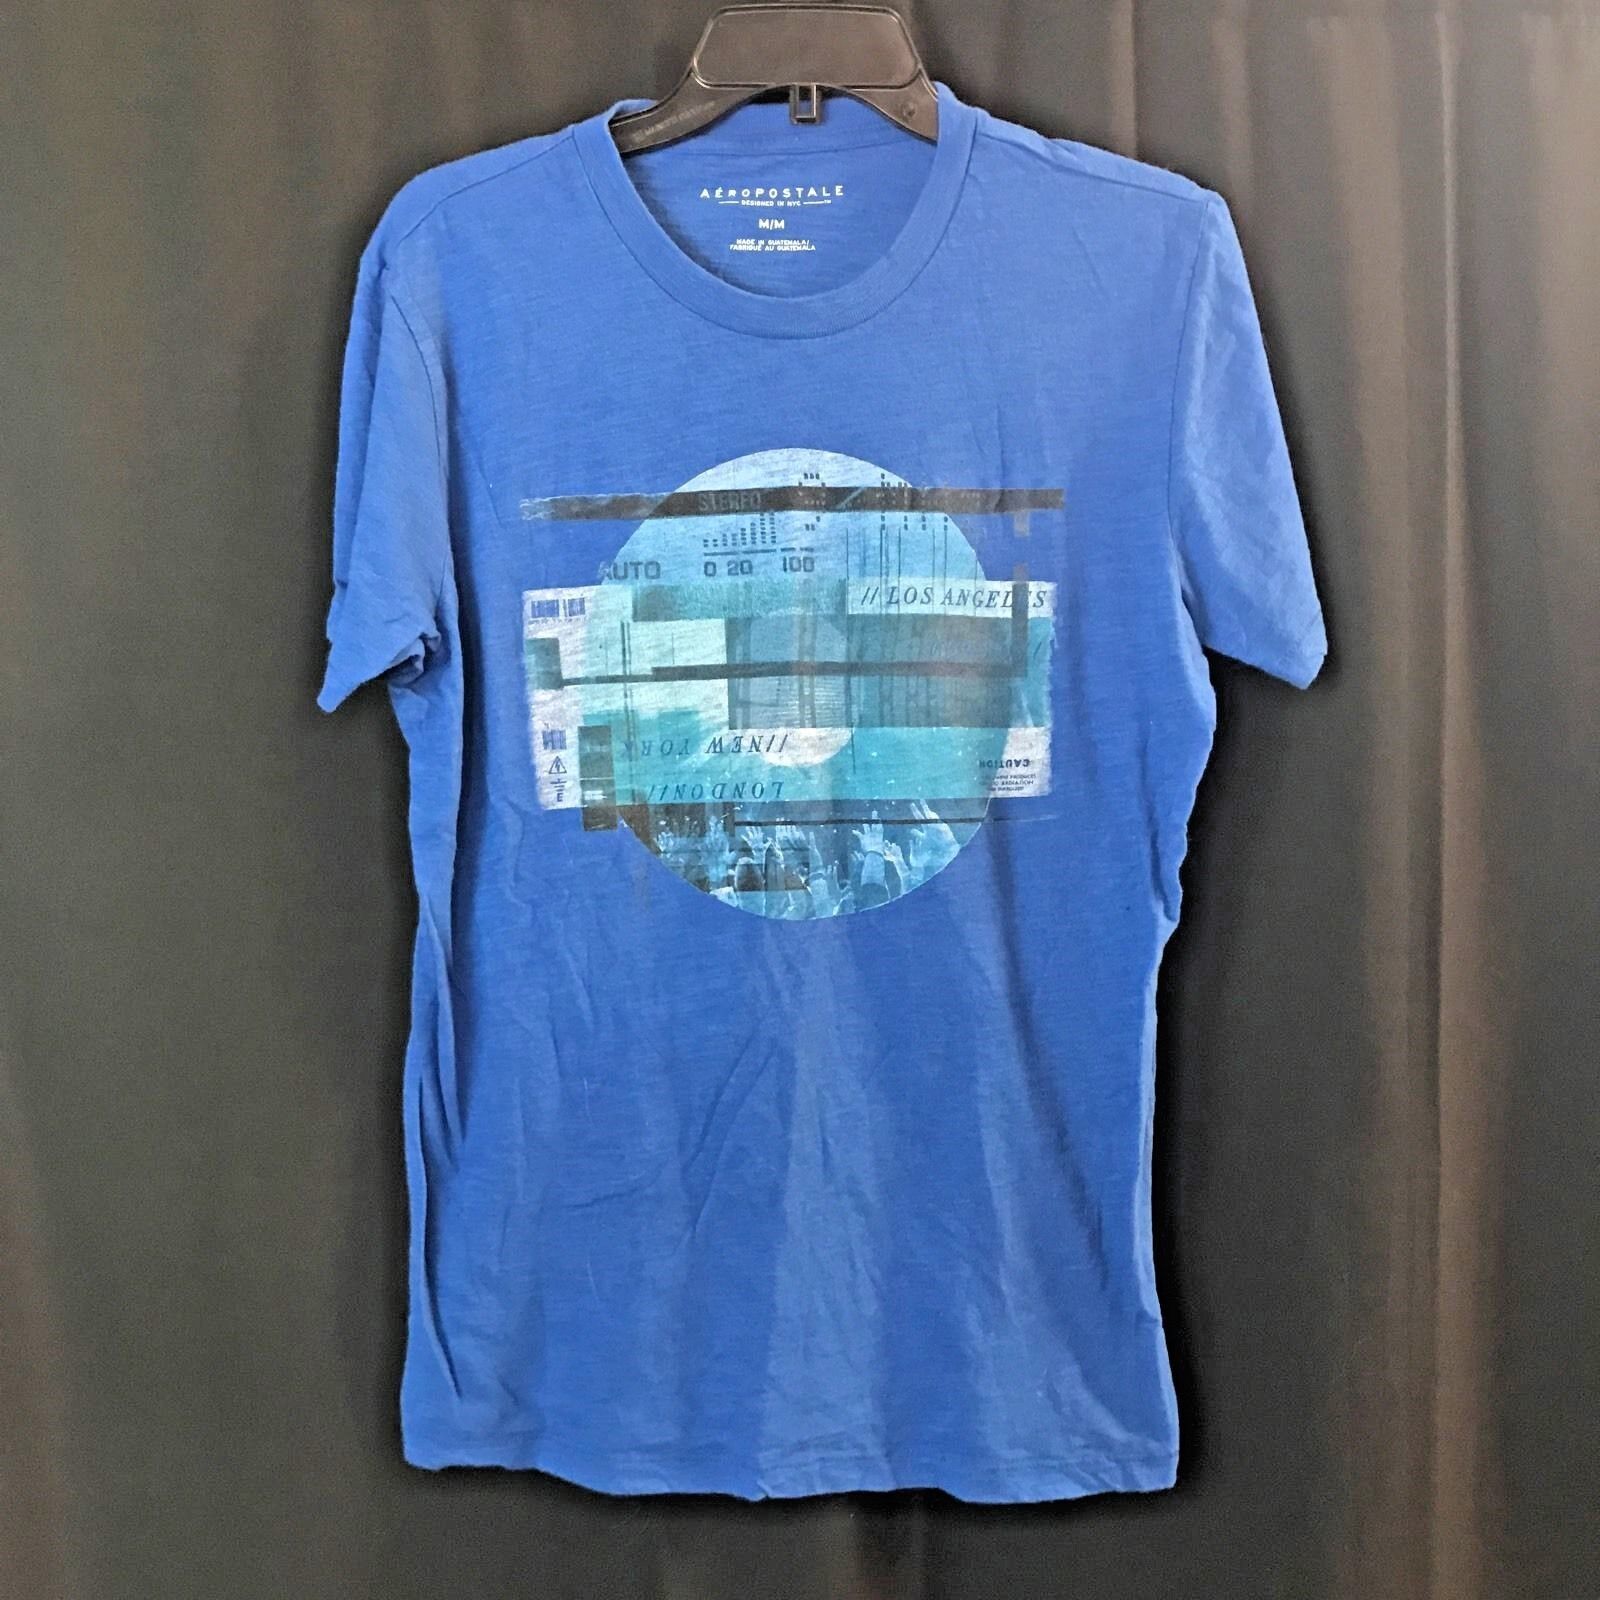 Primary image for Aeropostale Blue Light Blue Men's design Tee- Shirts Size Medium M